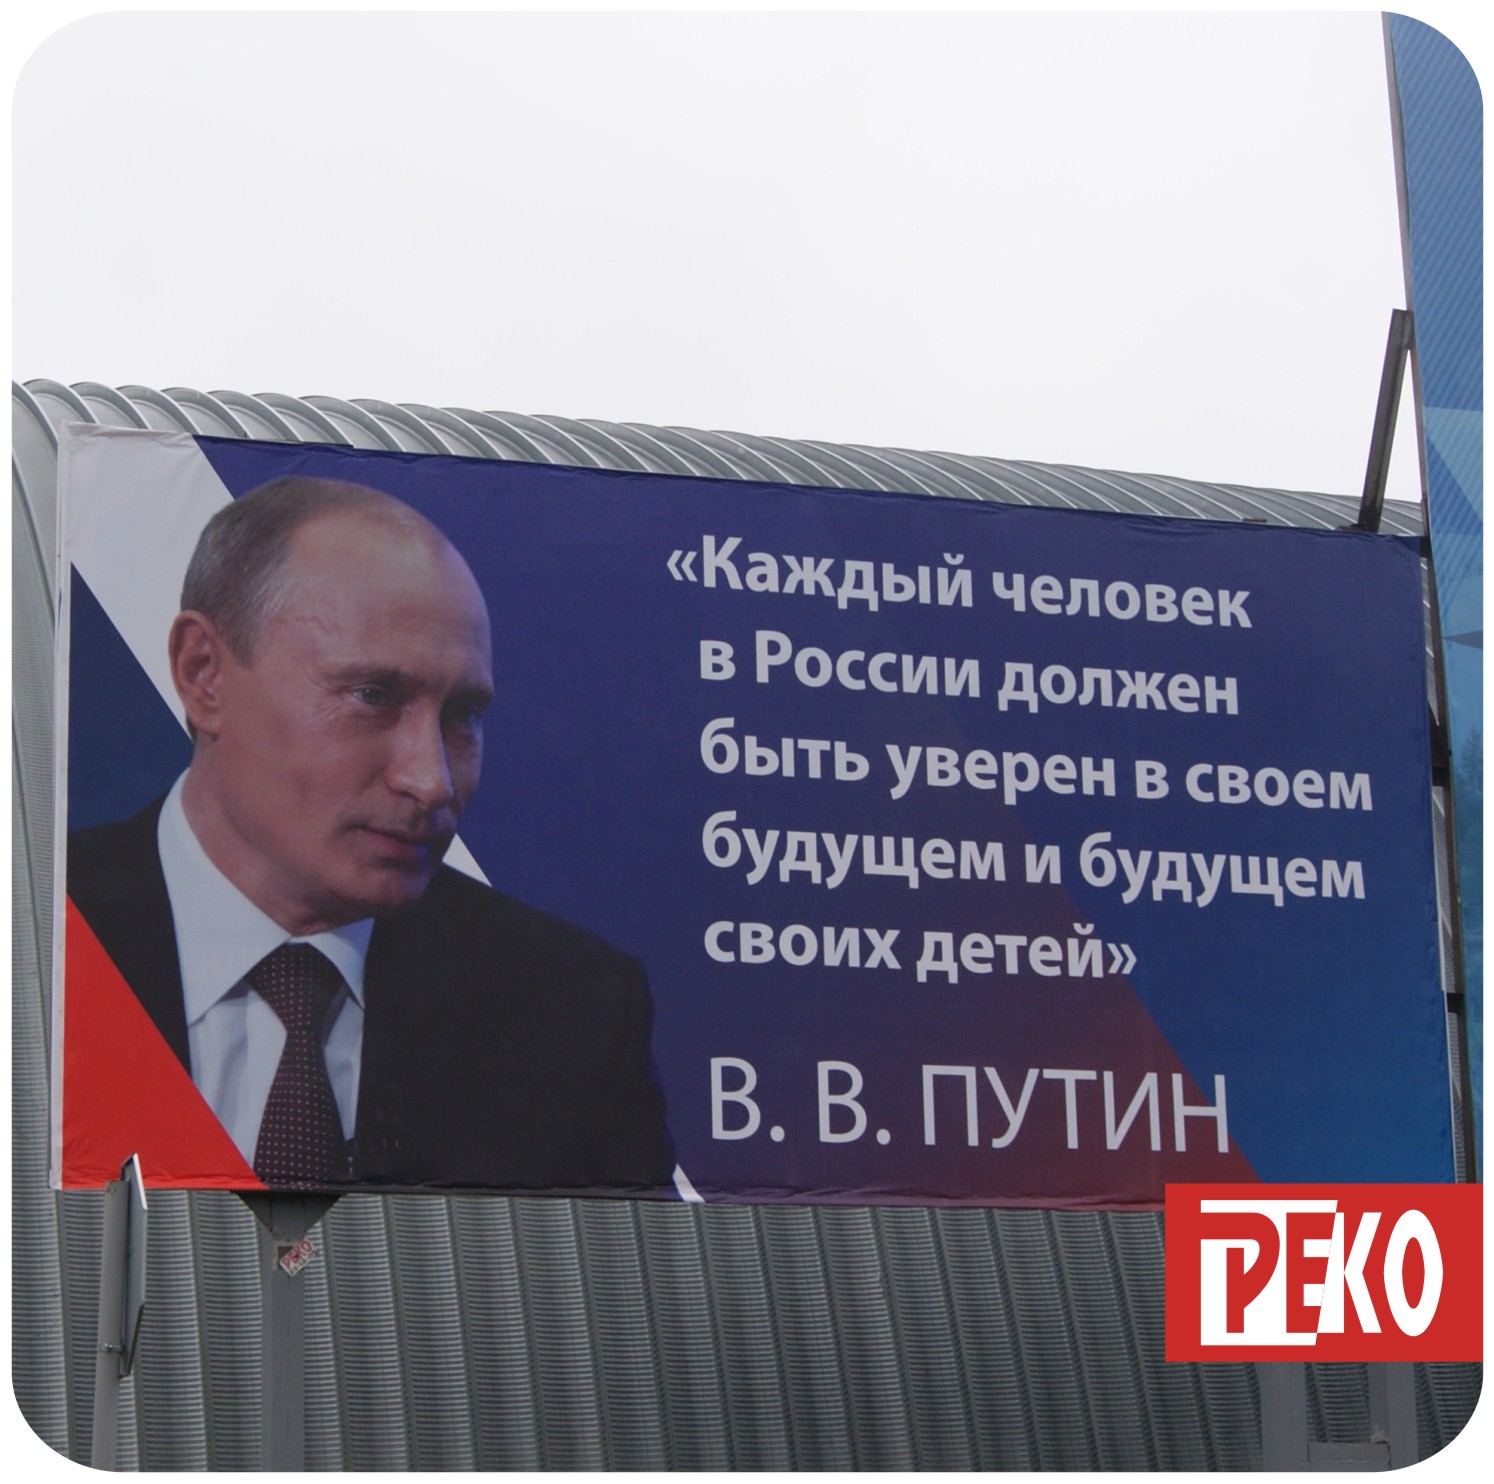 Размещение в Кирове на билбордах 3х6